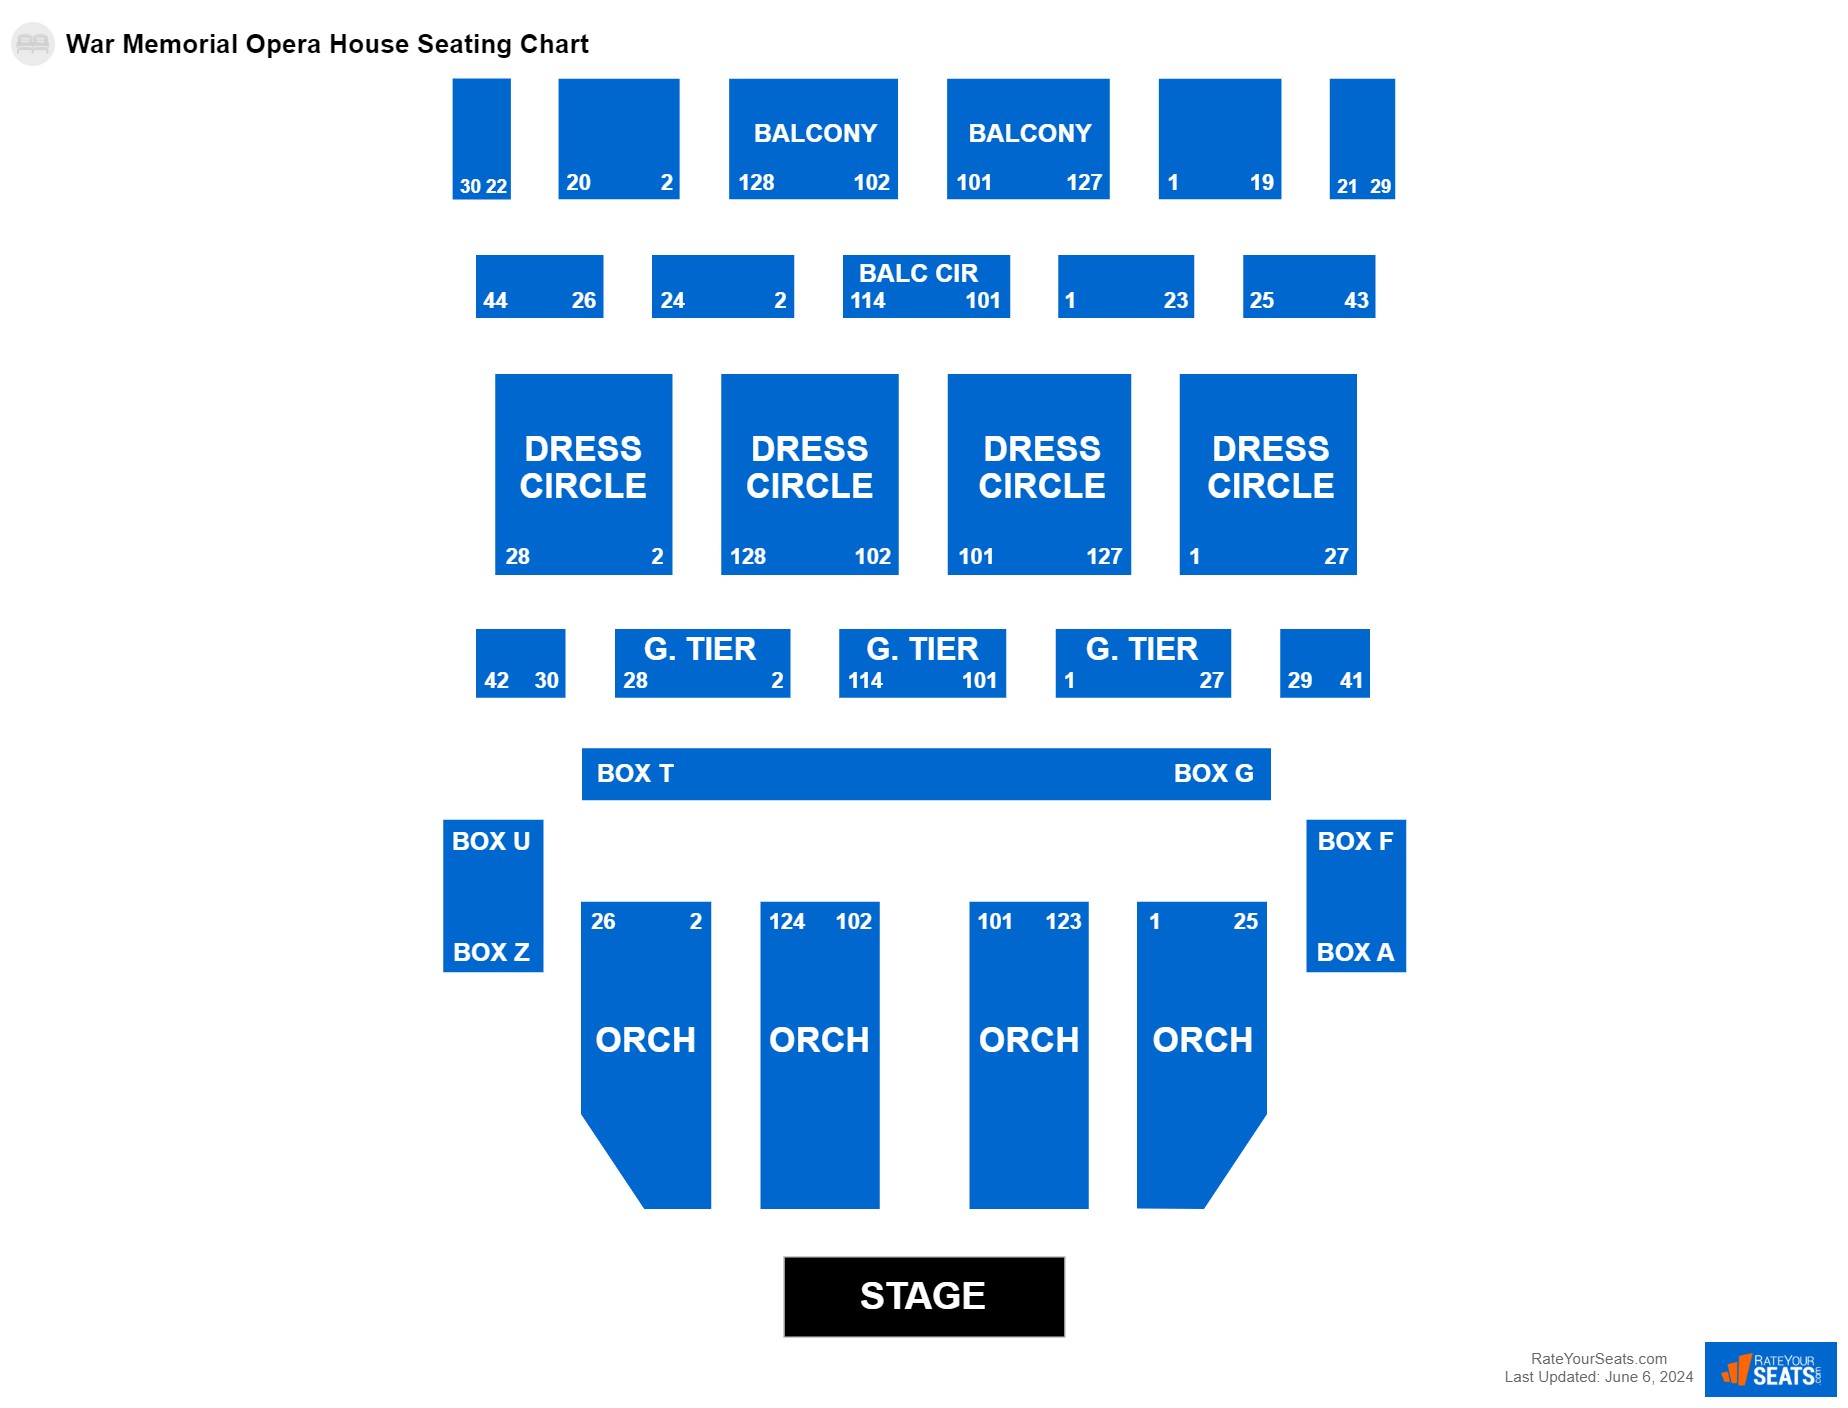 Theater seating chart at War Memorial Opera House